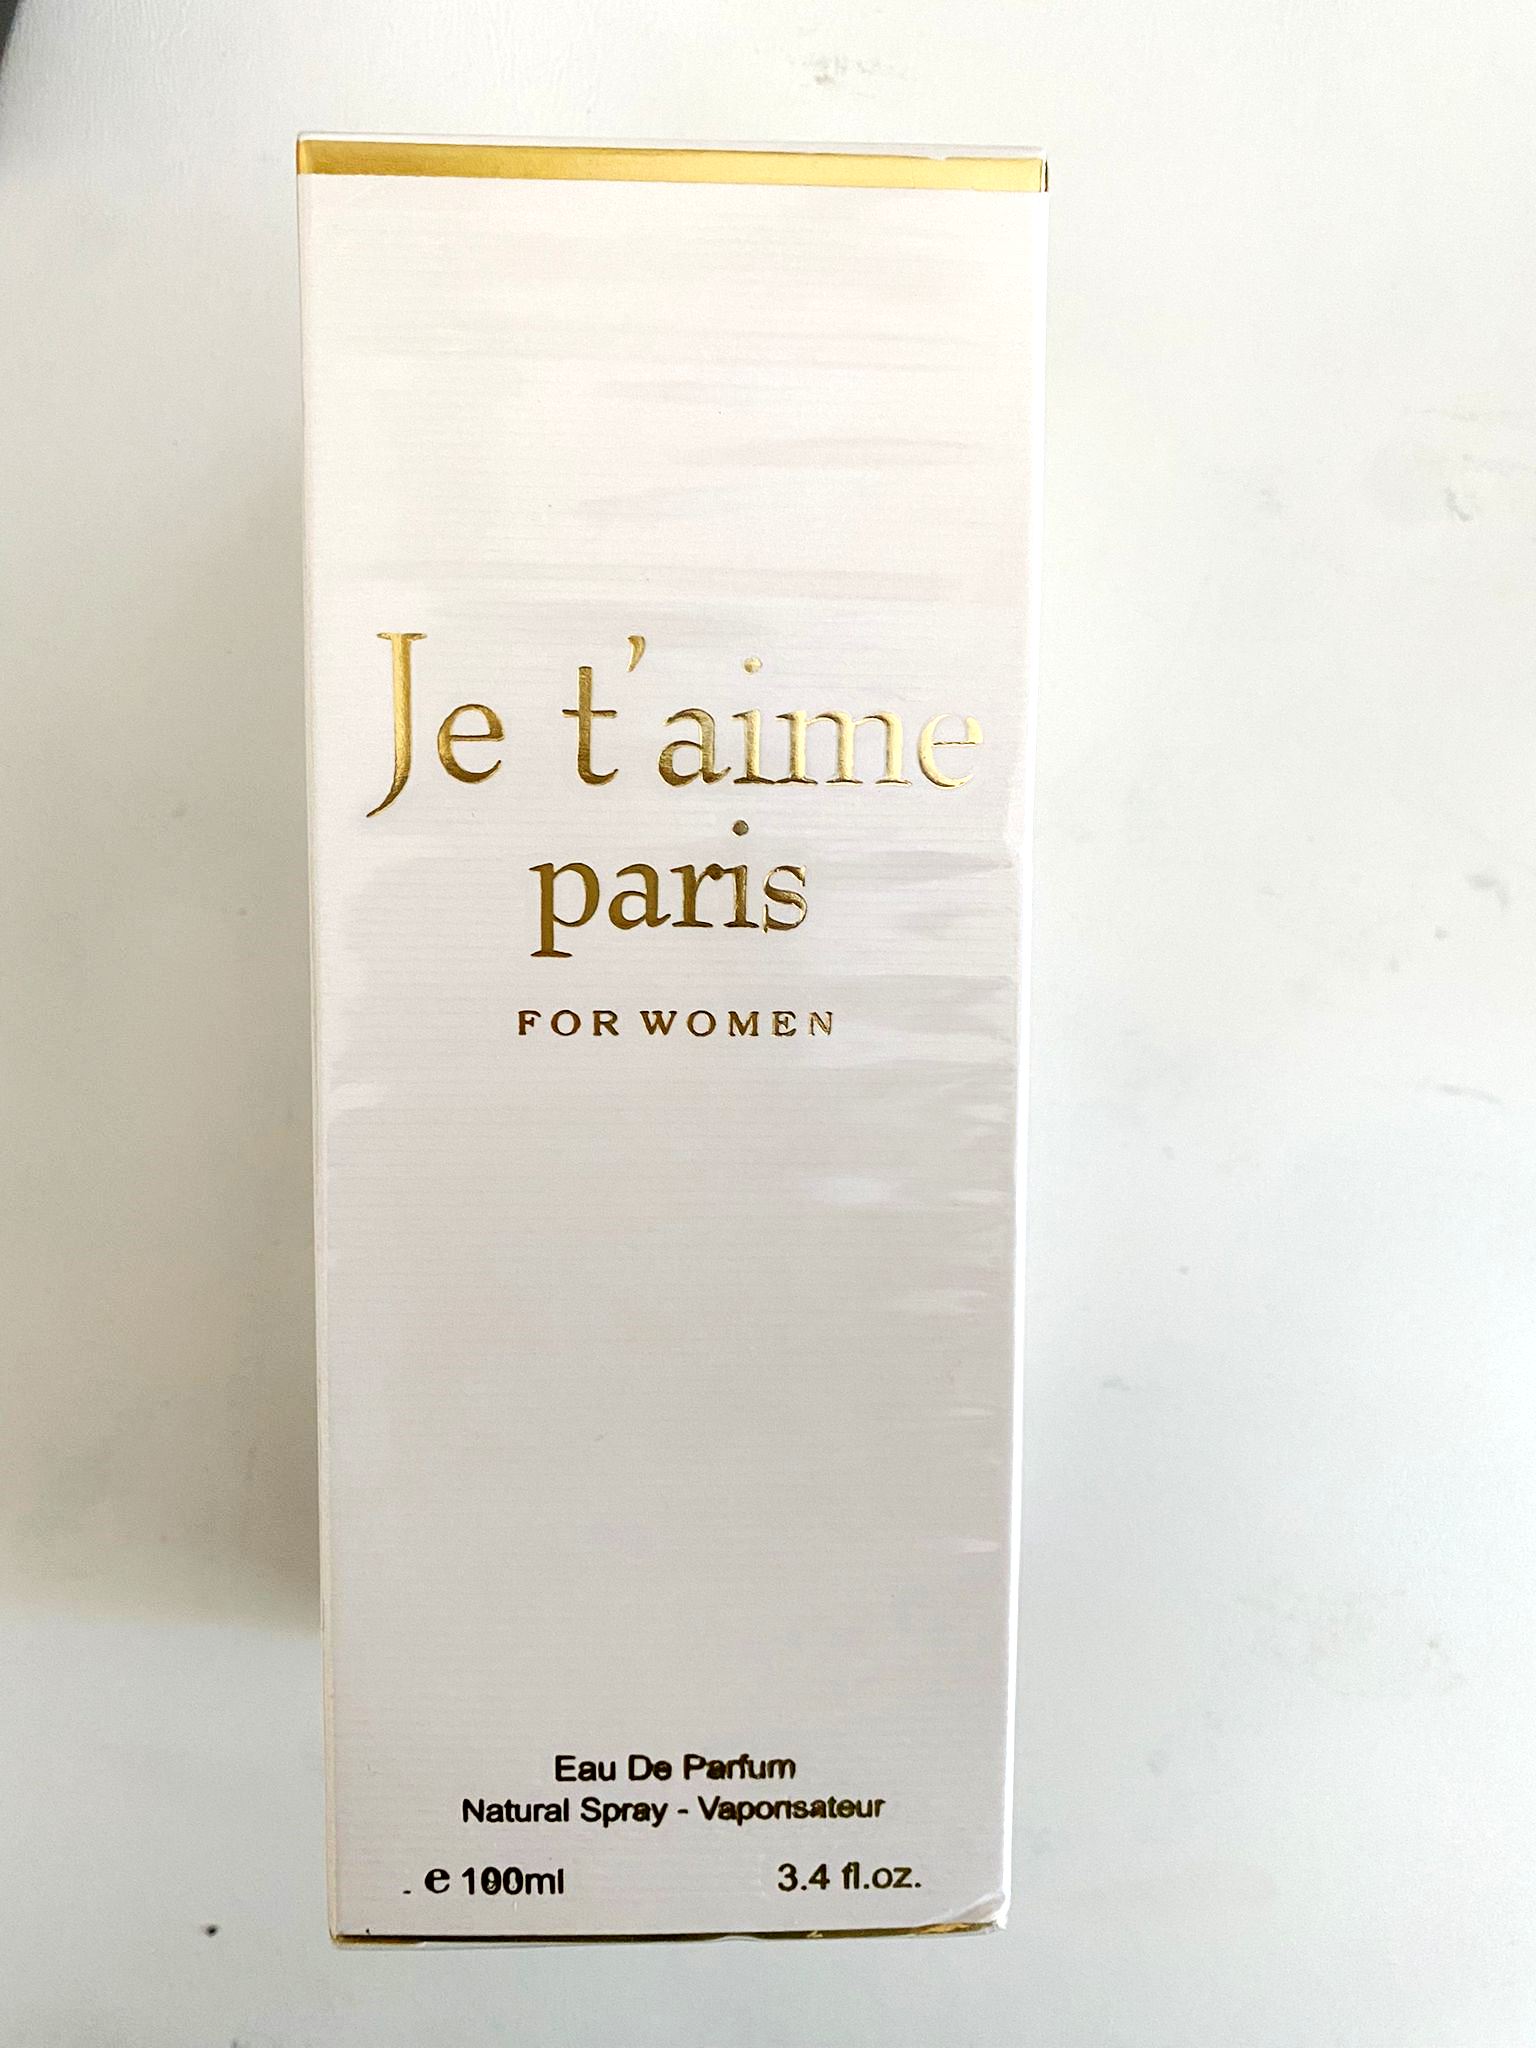 Je t’aime Paris perfume box